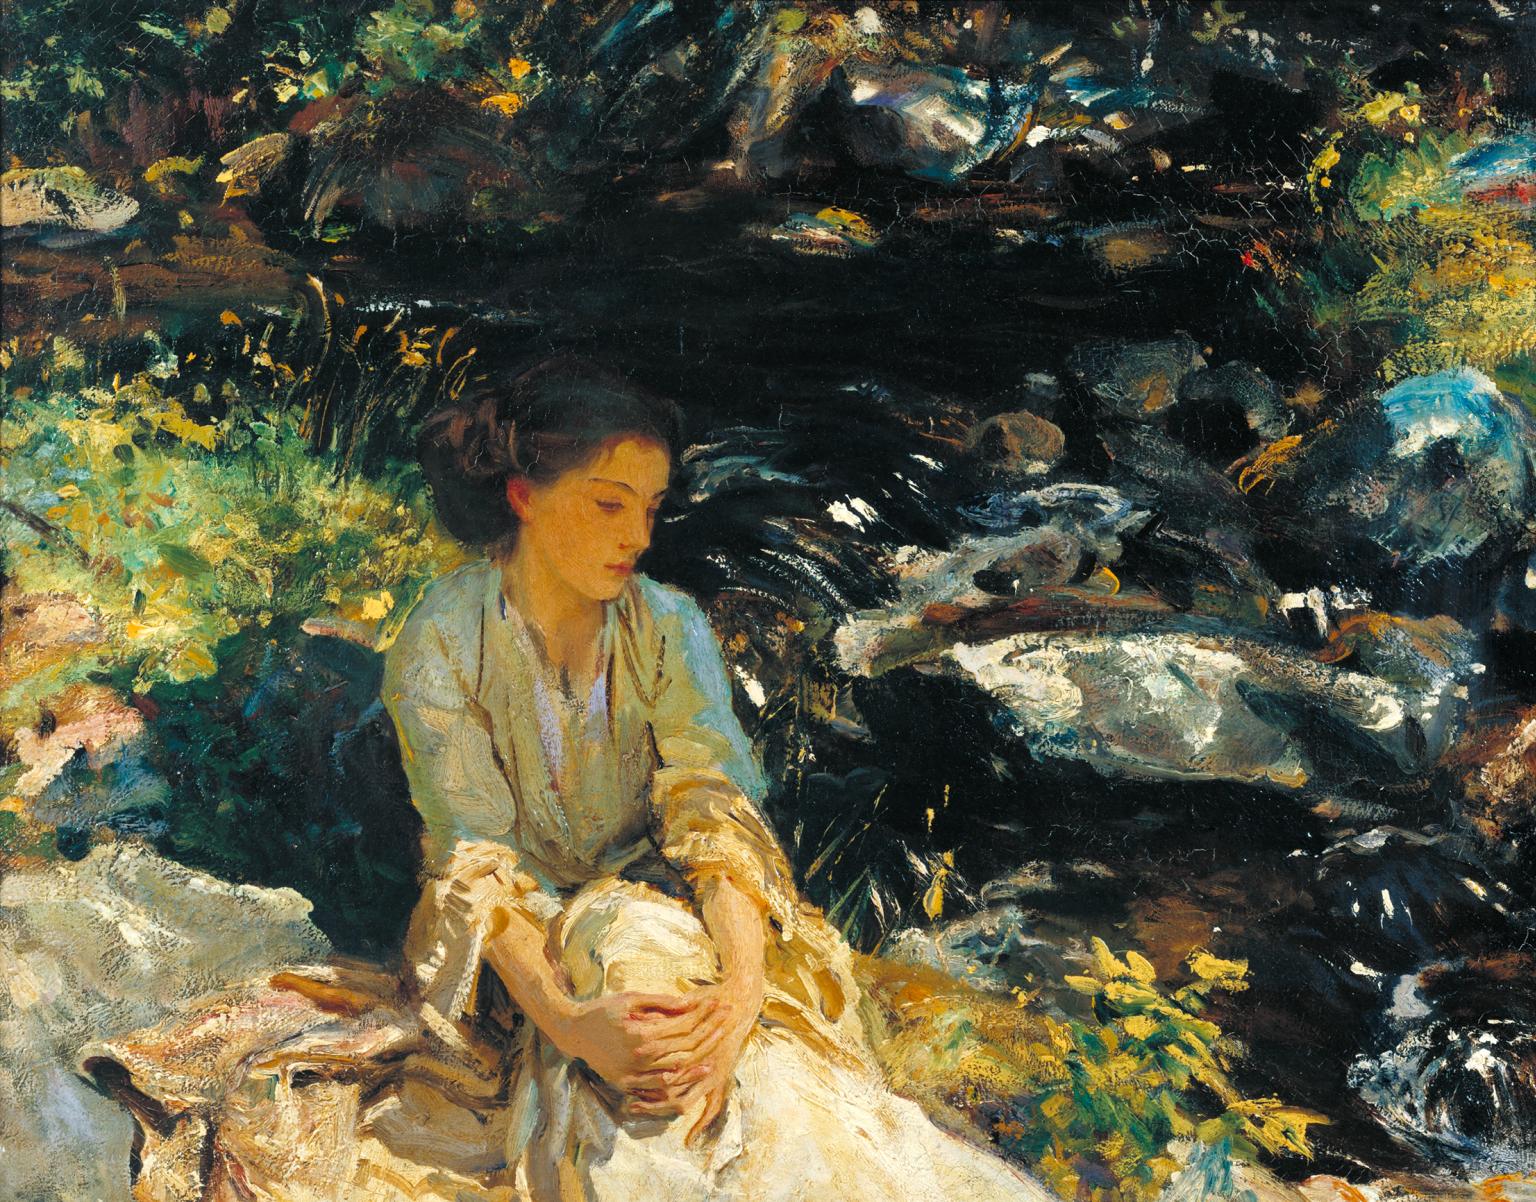 O riacho preto by John Singer Sargent - c.1908  Tate Modern